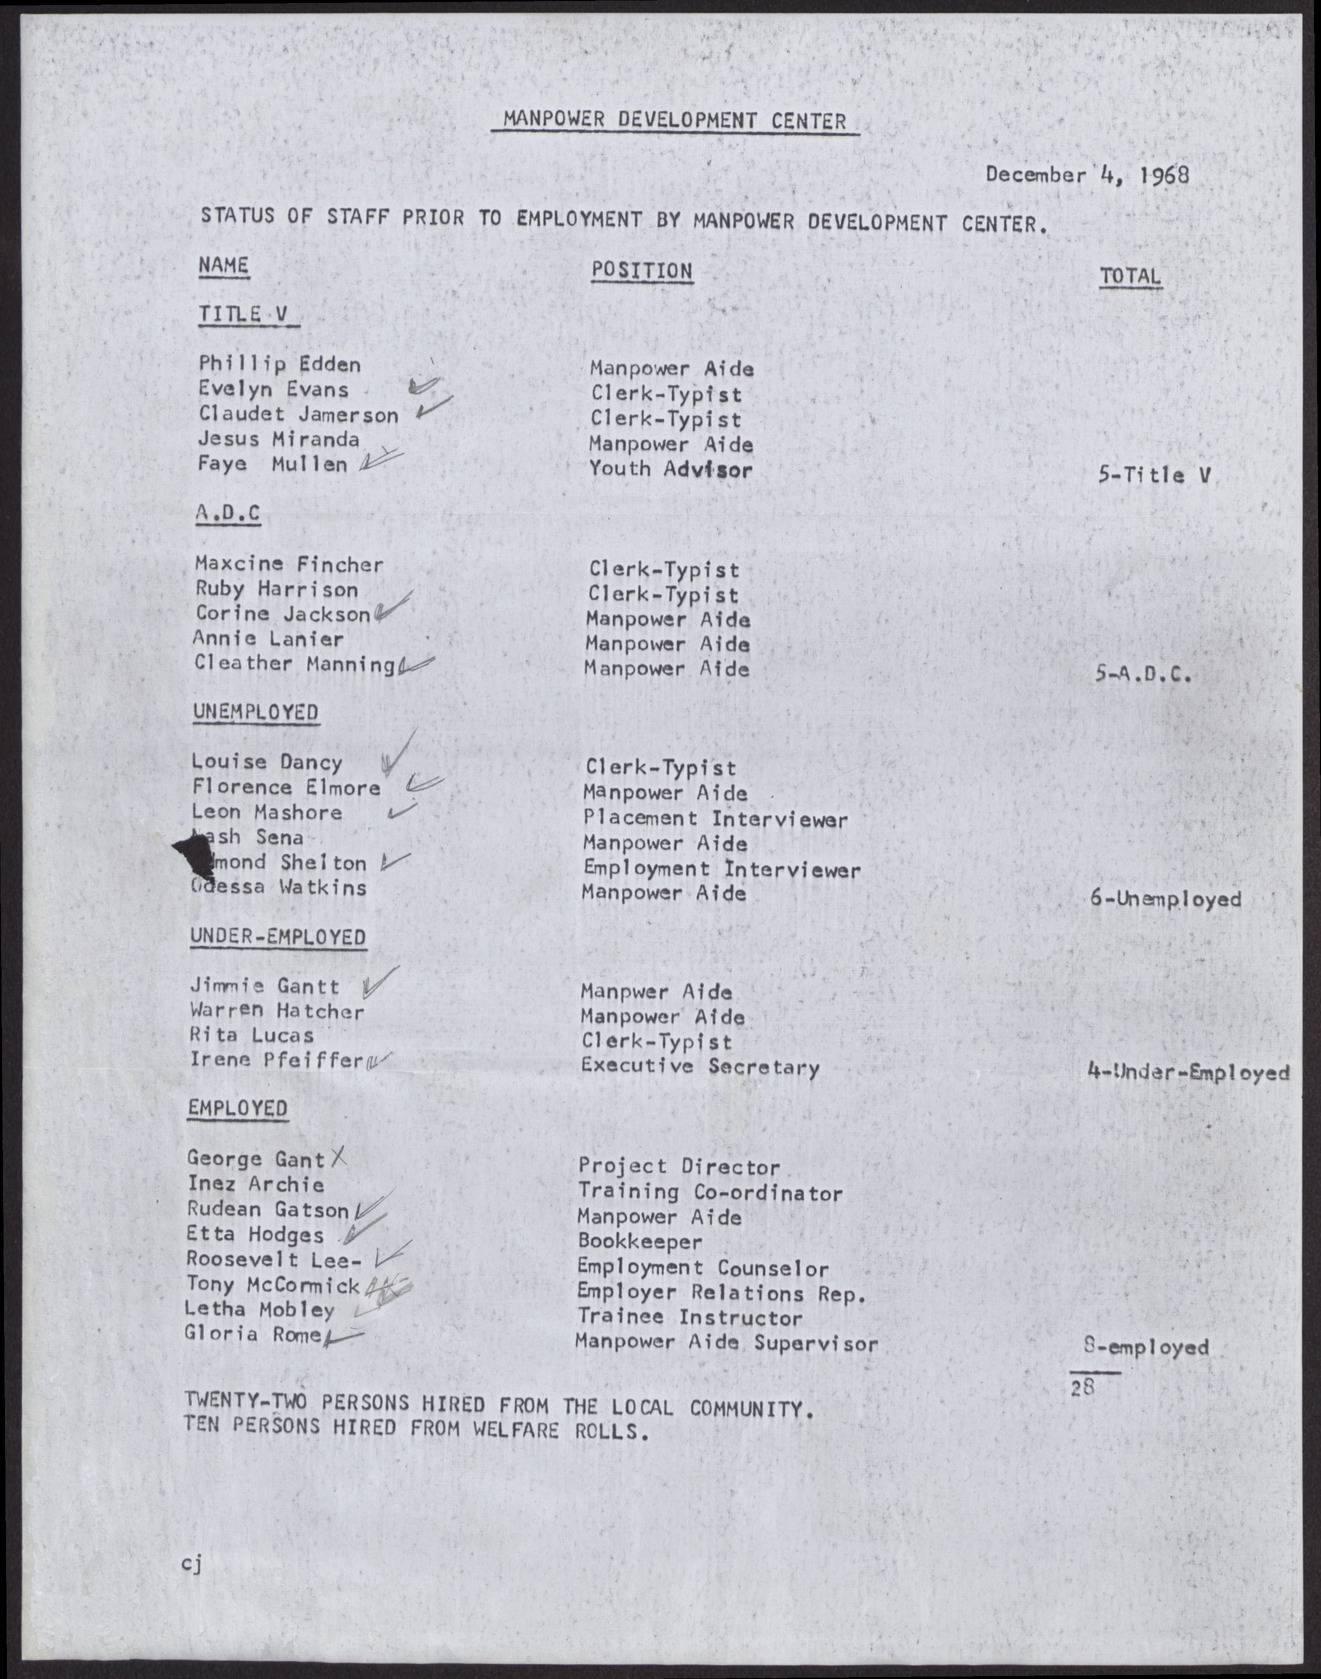 Manpower Development Center's form listing the status of staff prior to employment by Manpower Development Center, December 4, 1968